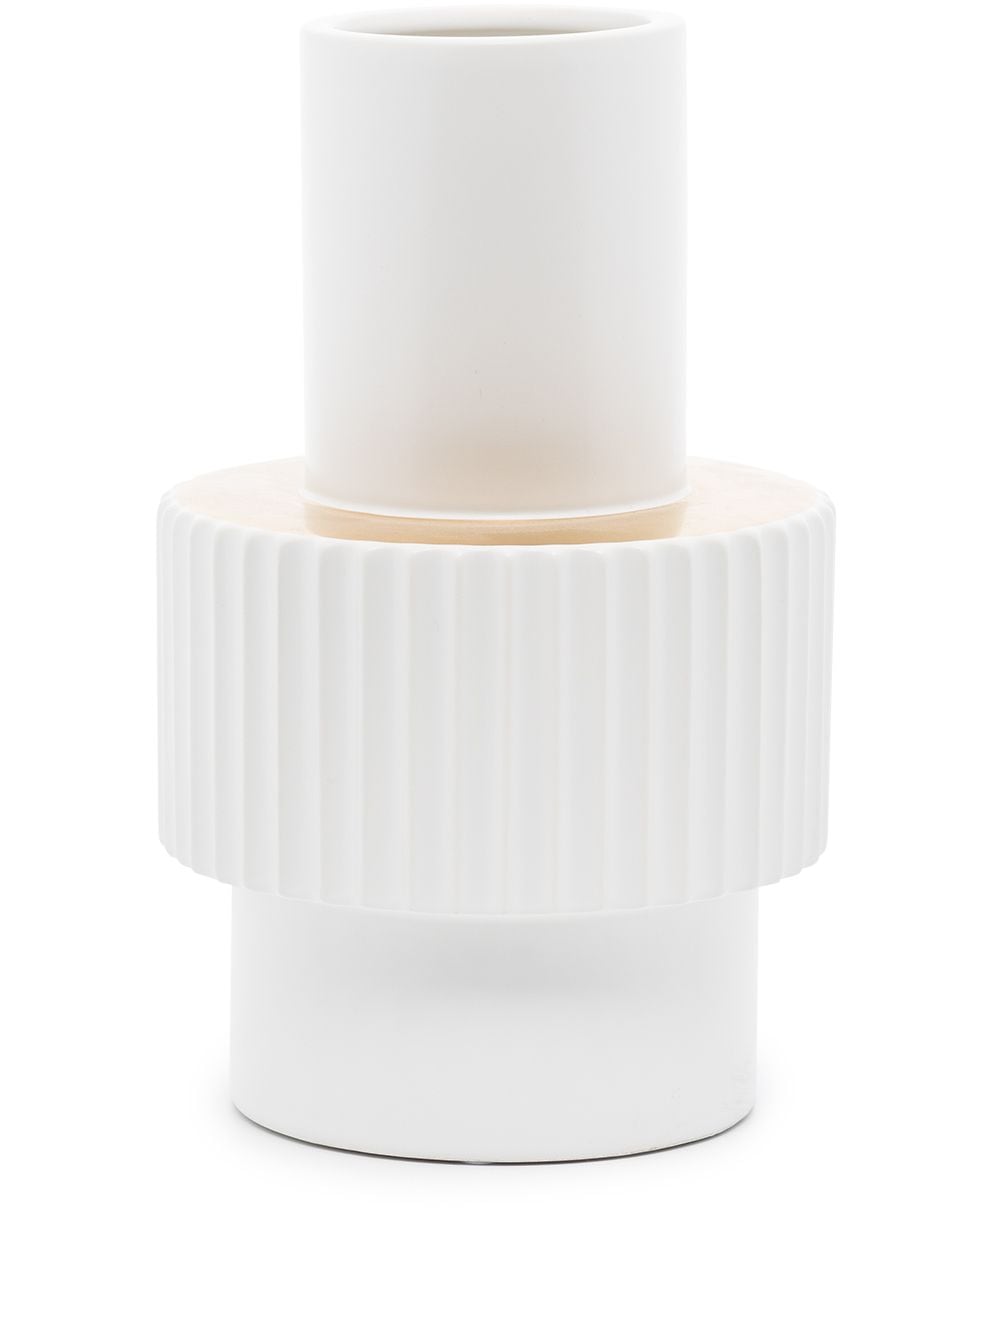 POLSPOTTEN small Gear ceramic vase (25,5cm) - White von POLSPOTTEN